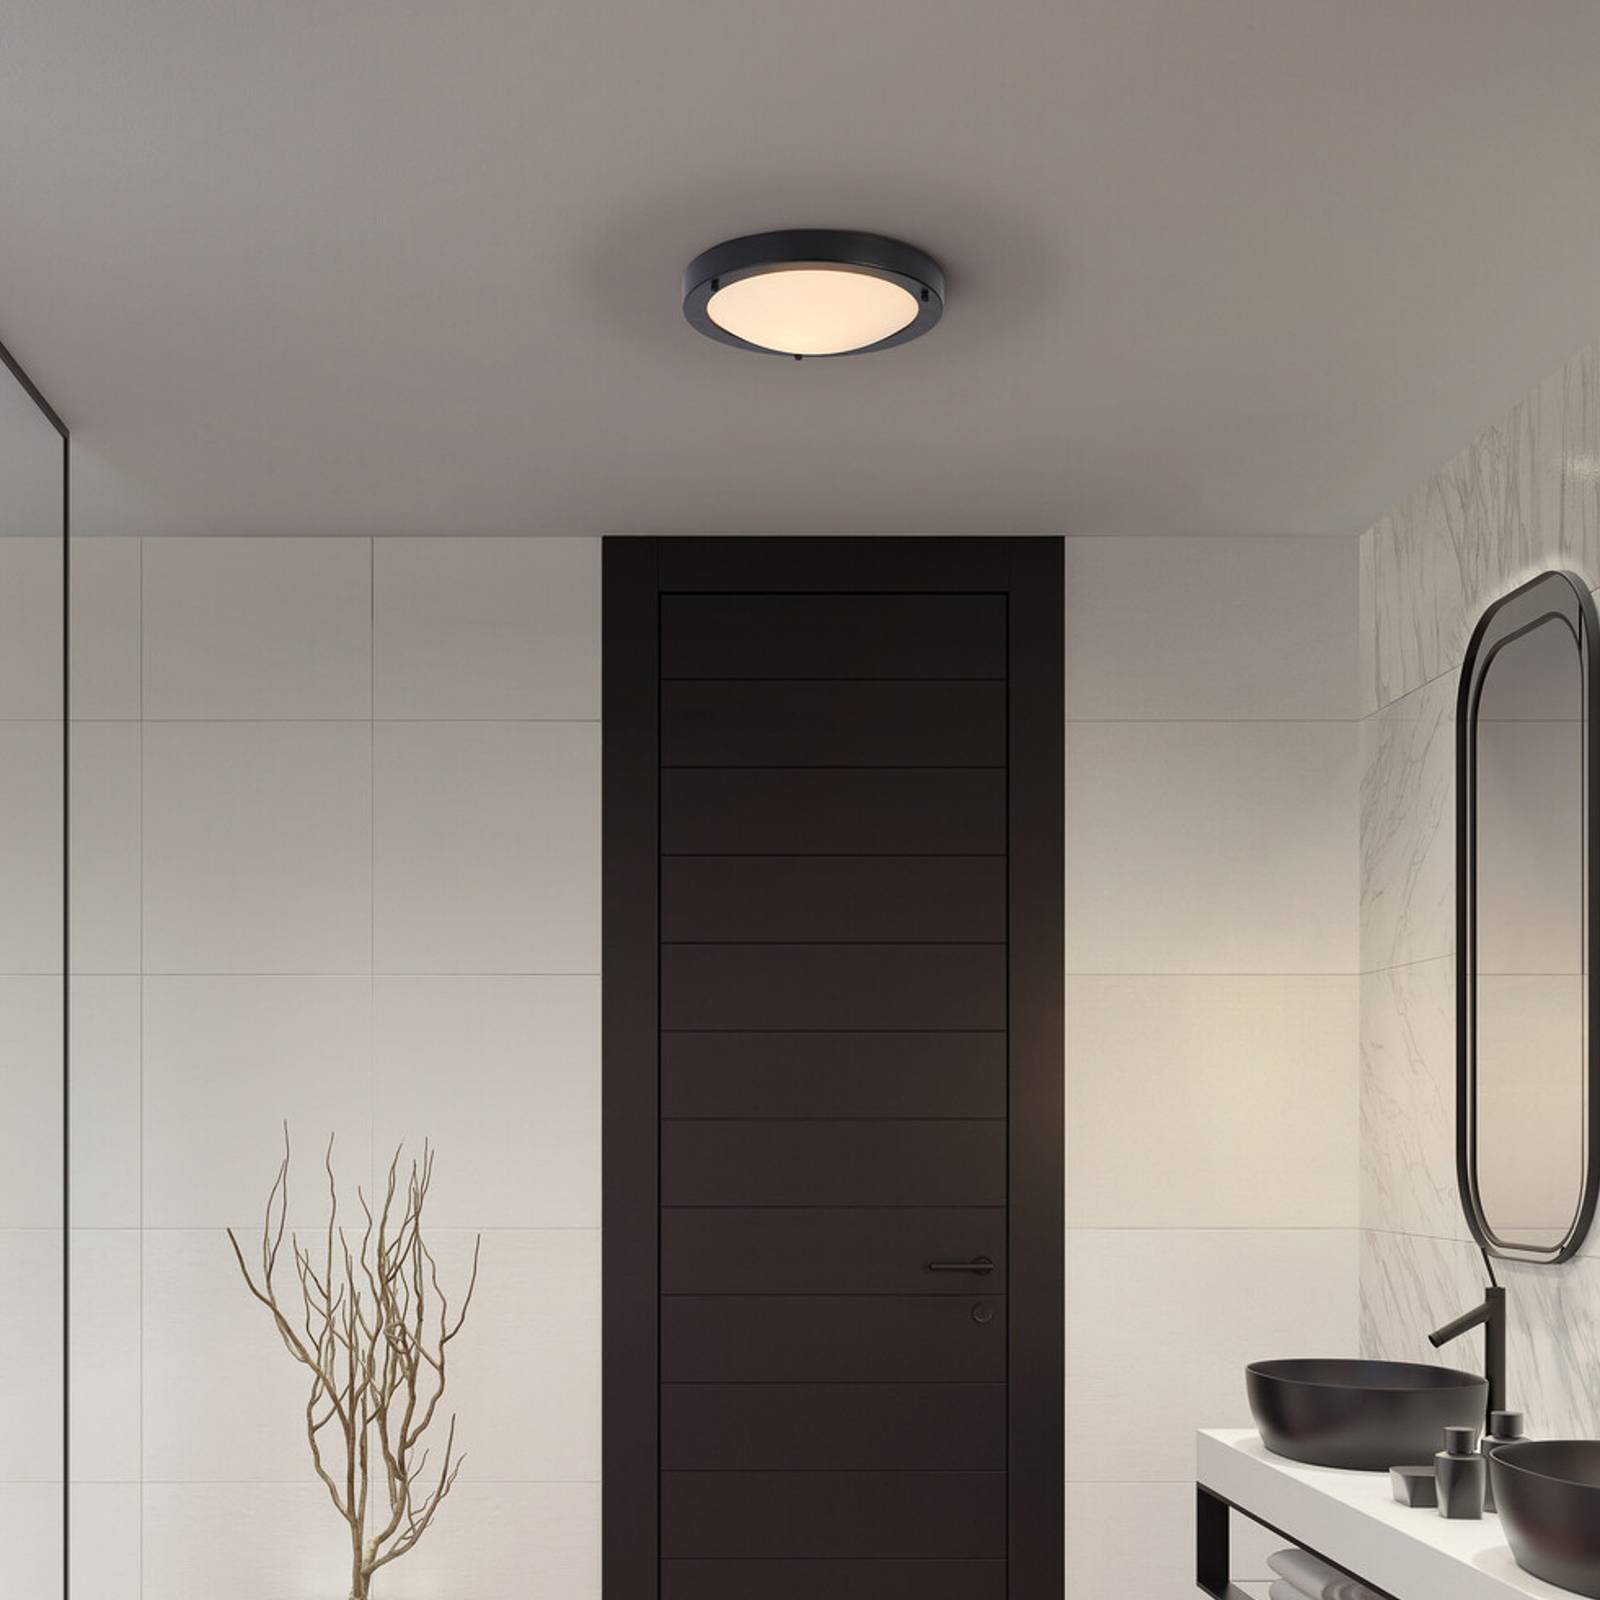 LEDVANCE Bathroom Classic Round plafond 31 cm noir